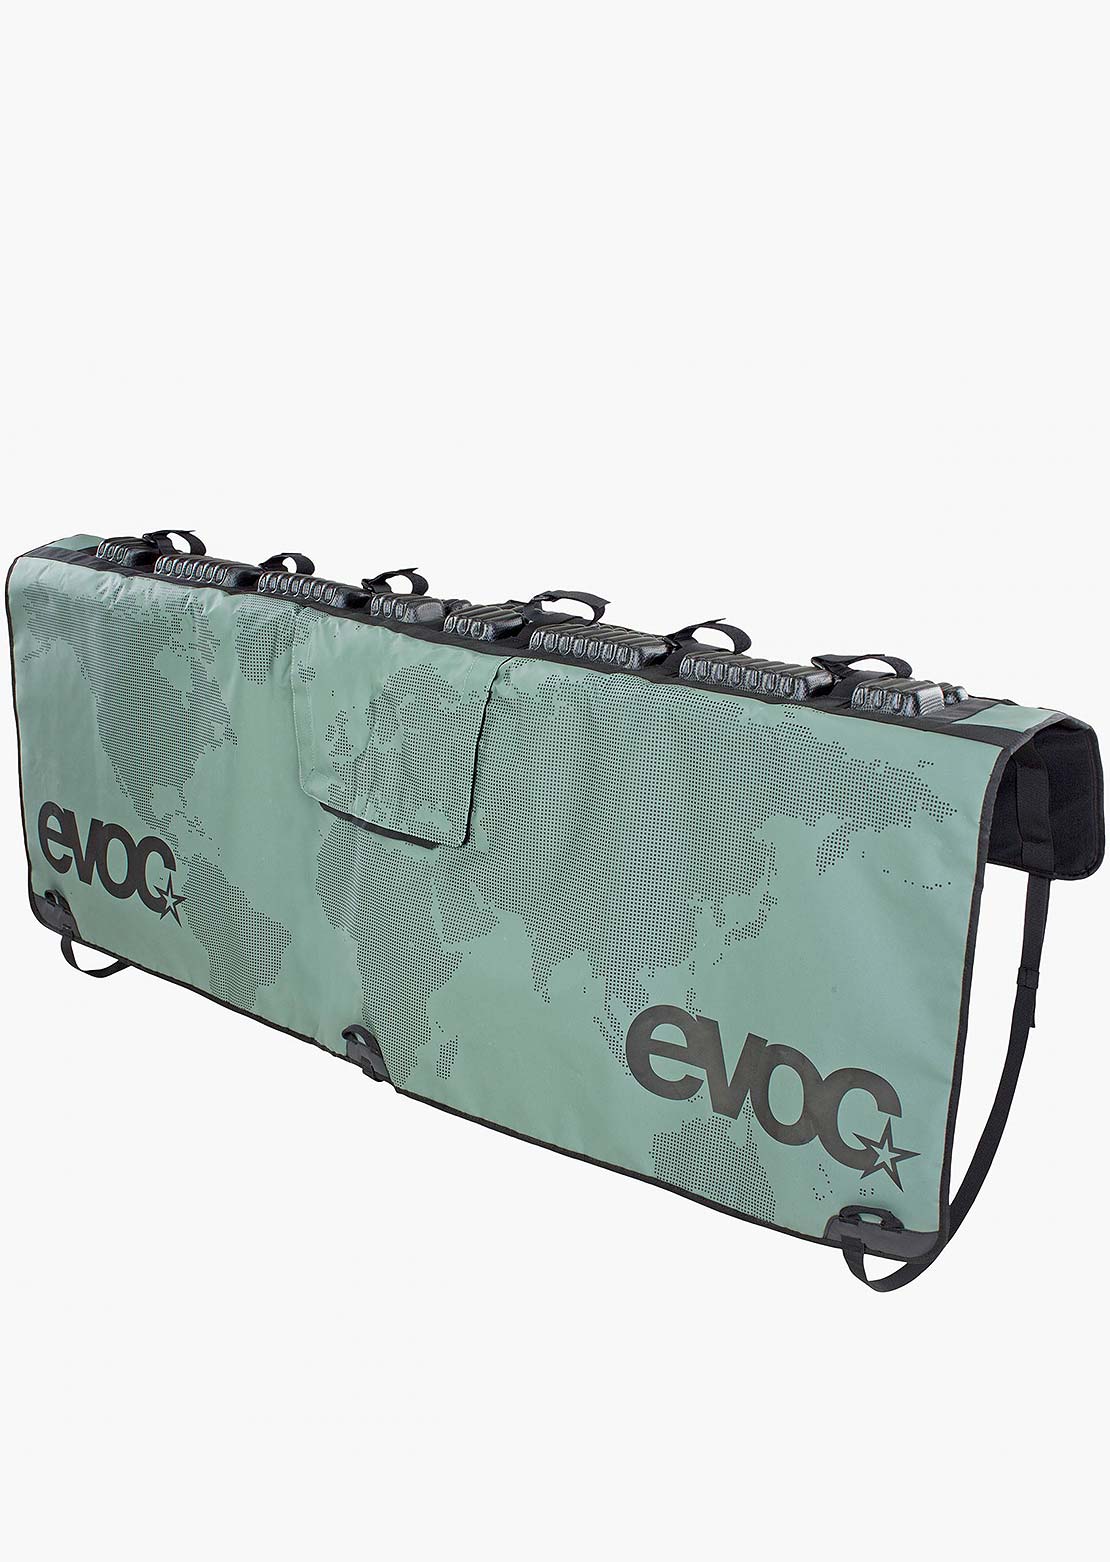 Evoc Pickup Box Panel Protector Tailgate Pad - 160cm Olive